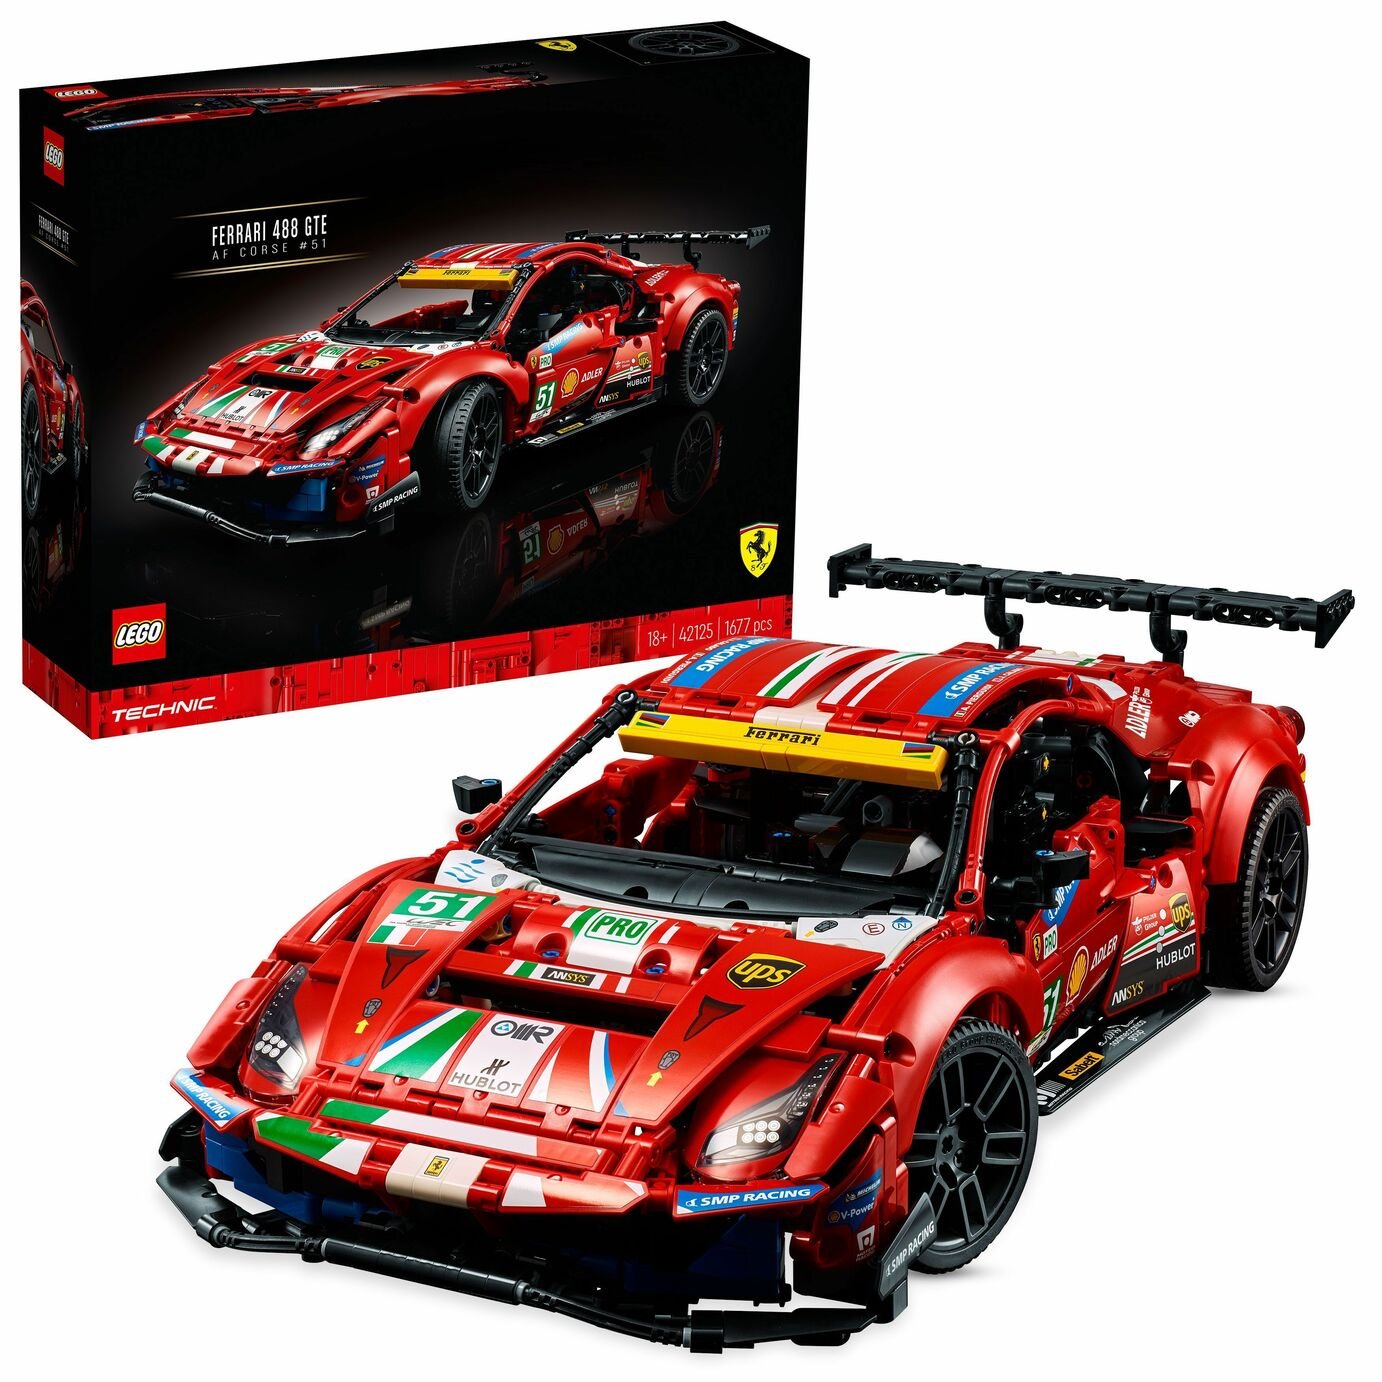 LEGO Technic Ferrari 488 GTE AF Corse No 51 Car Set 42125 review